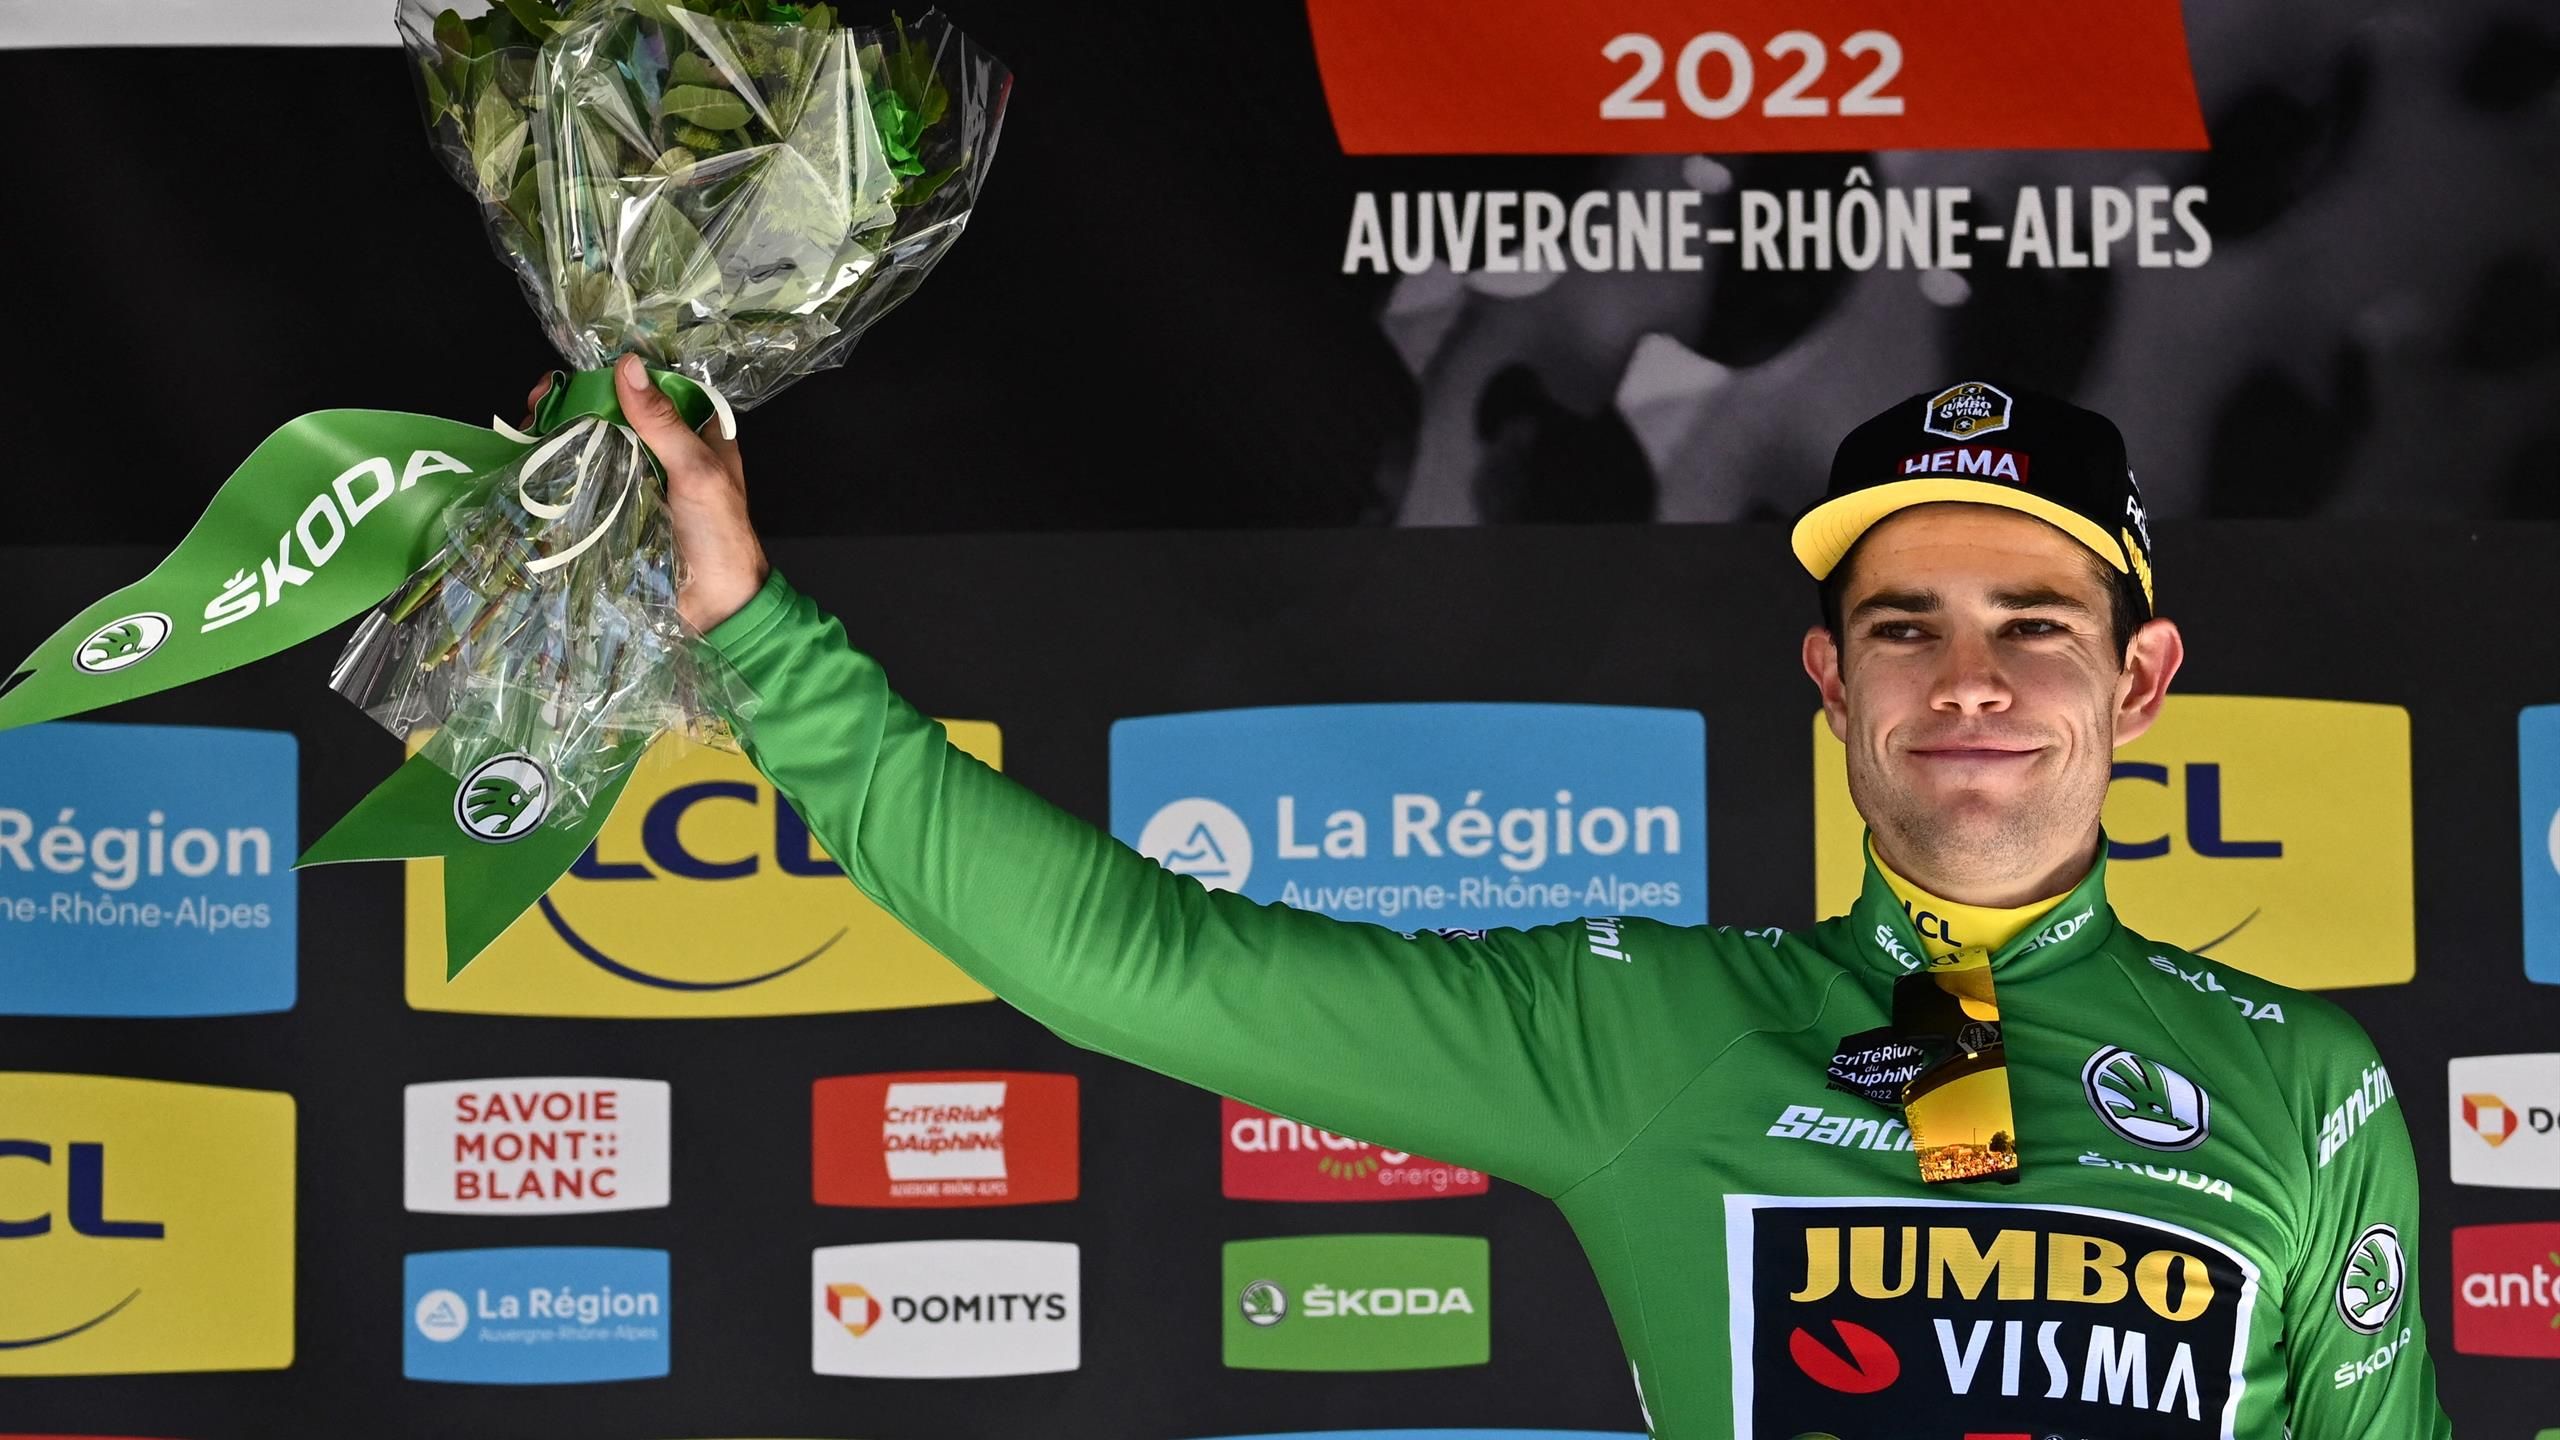 Persoonlijk blaas gat Sophie Tour de France 2022 – Green jersey and polka dot jersey guide: Wout van  Aert & Ruben Guerreiro favourites? - Eurosport